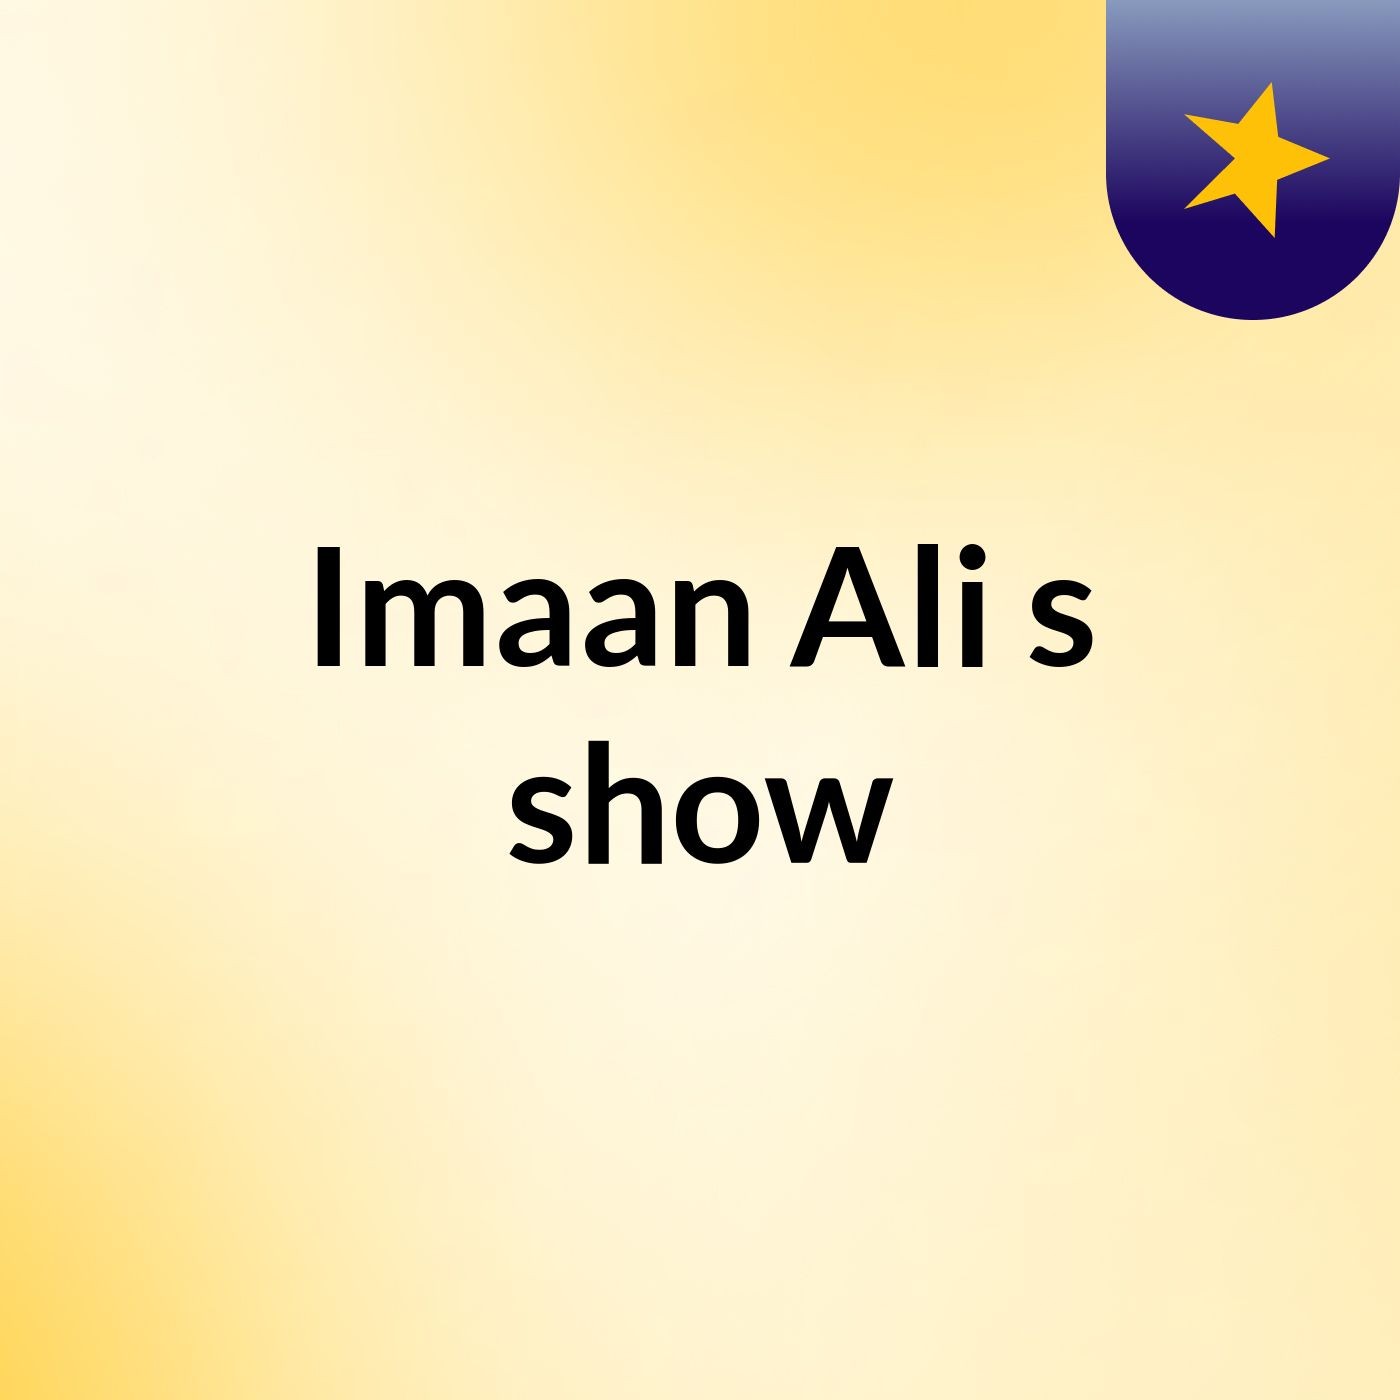 Imaan Ali's show